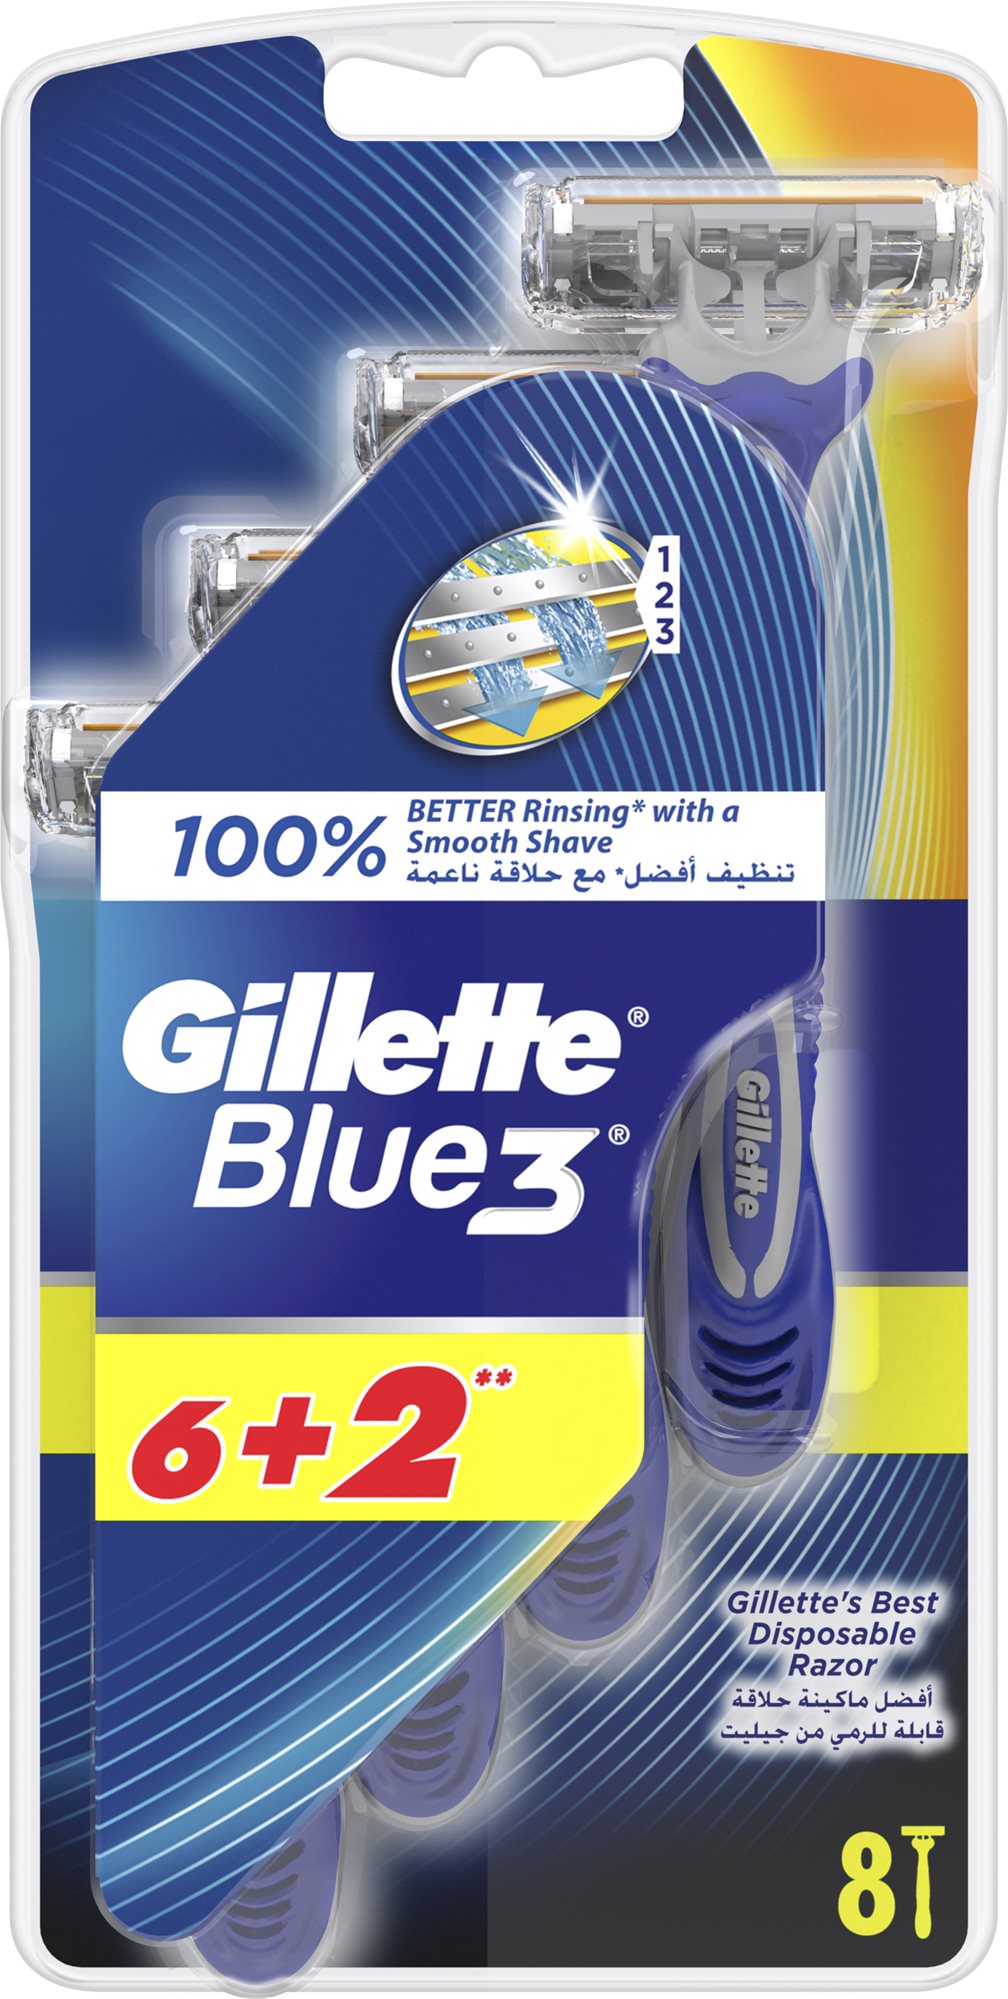 Eldobható borotva GILLETTE Blue3 6 + 2 darab